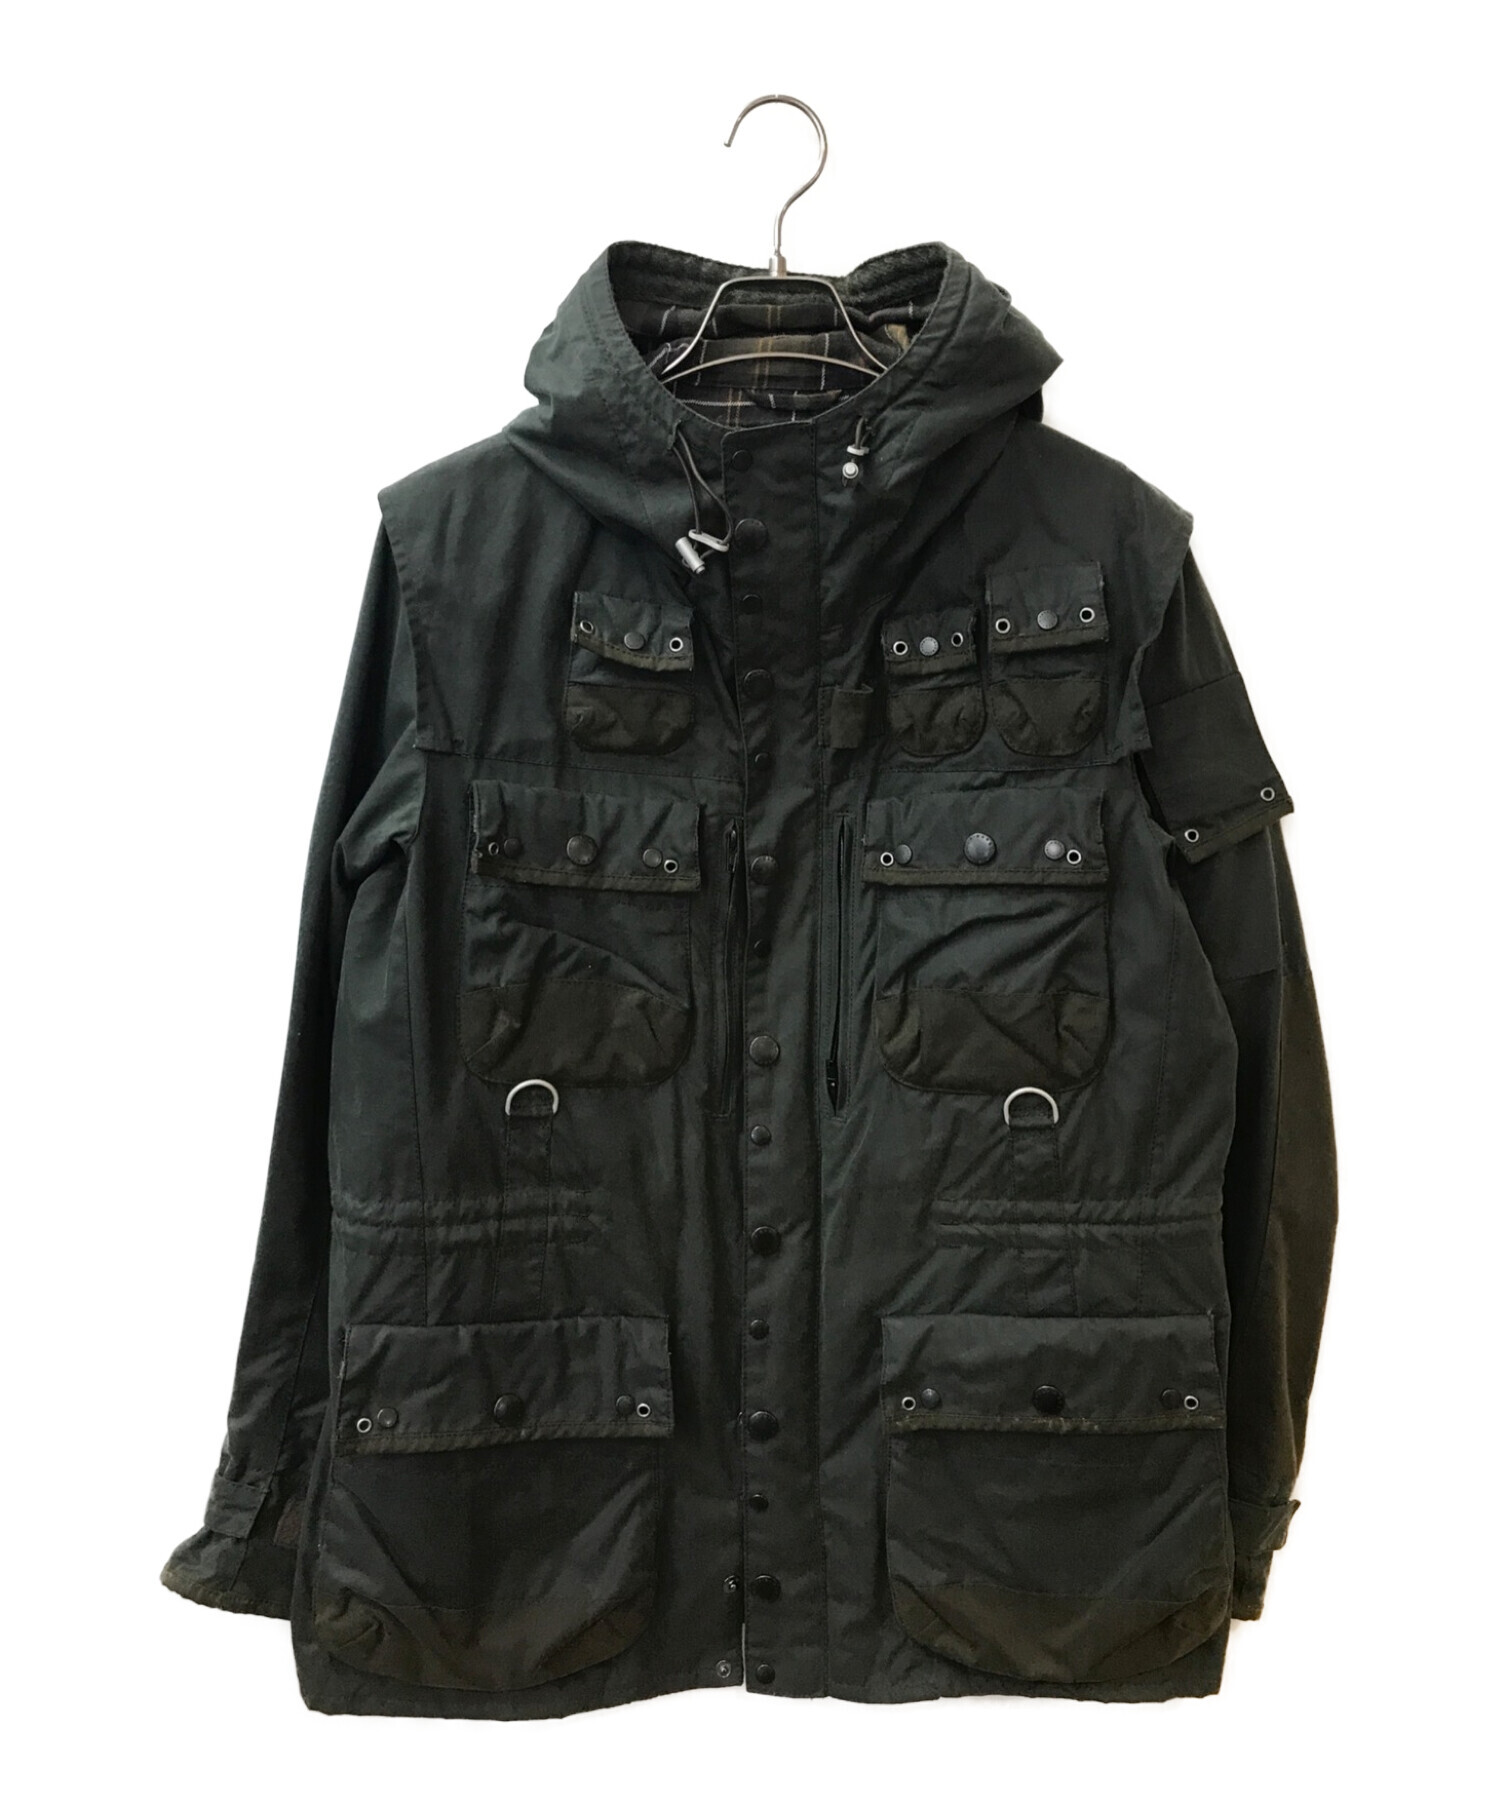 Barbour (バブアー) TOKITO (トキトー) Beacon Heritage Military Jacket グリーン サイズ:M